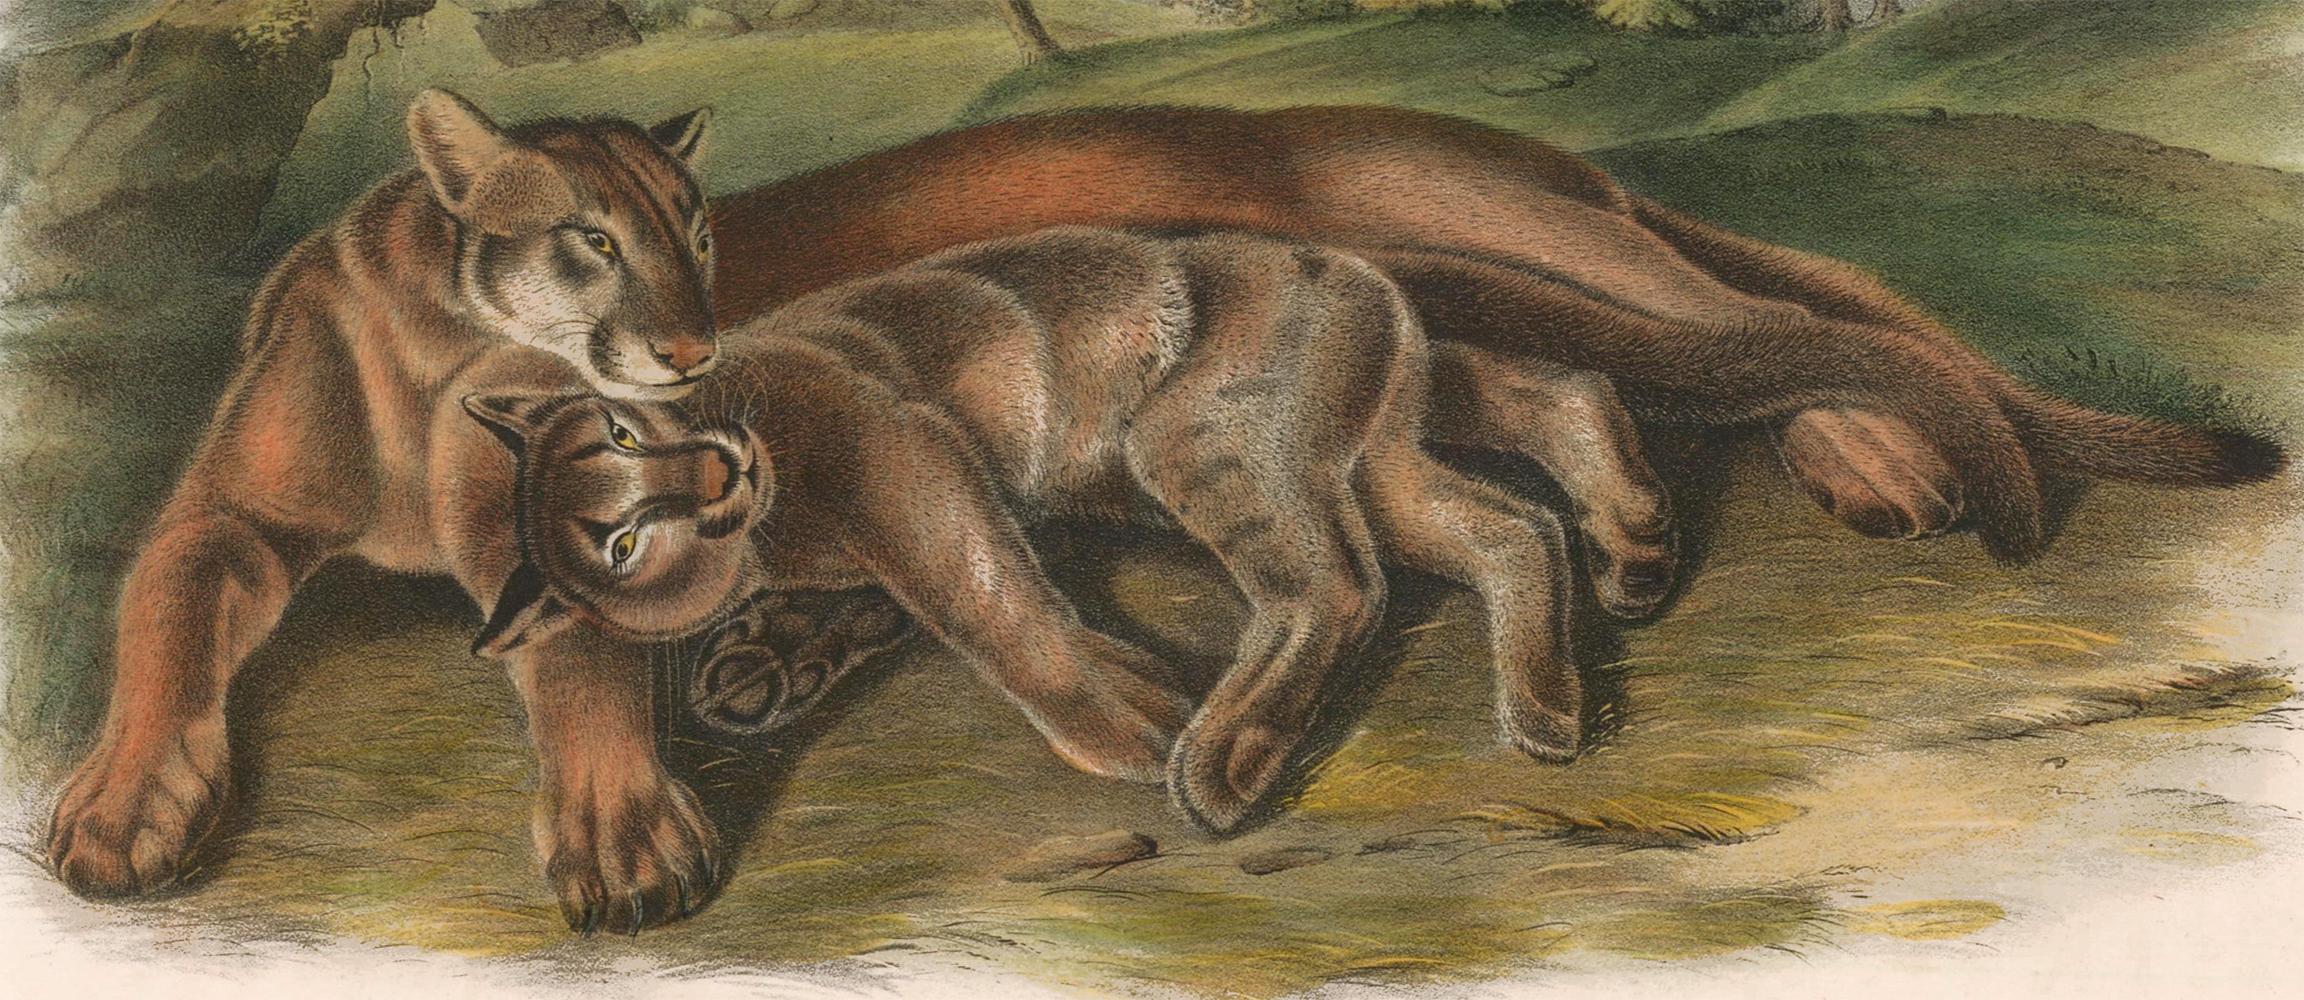 Cougar von Audubon (Braun), Animal Print, von John James Audubon